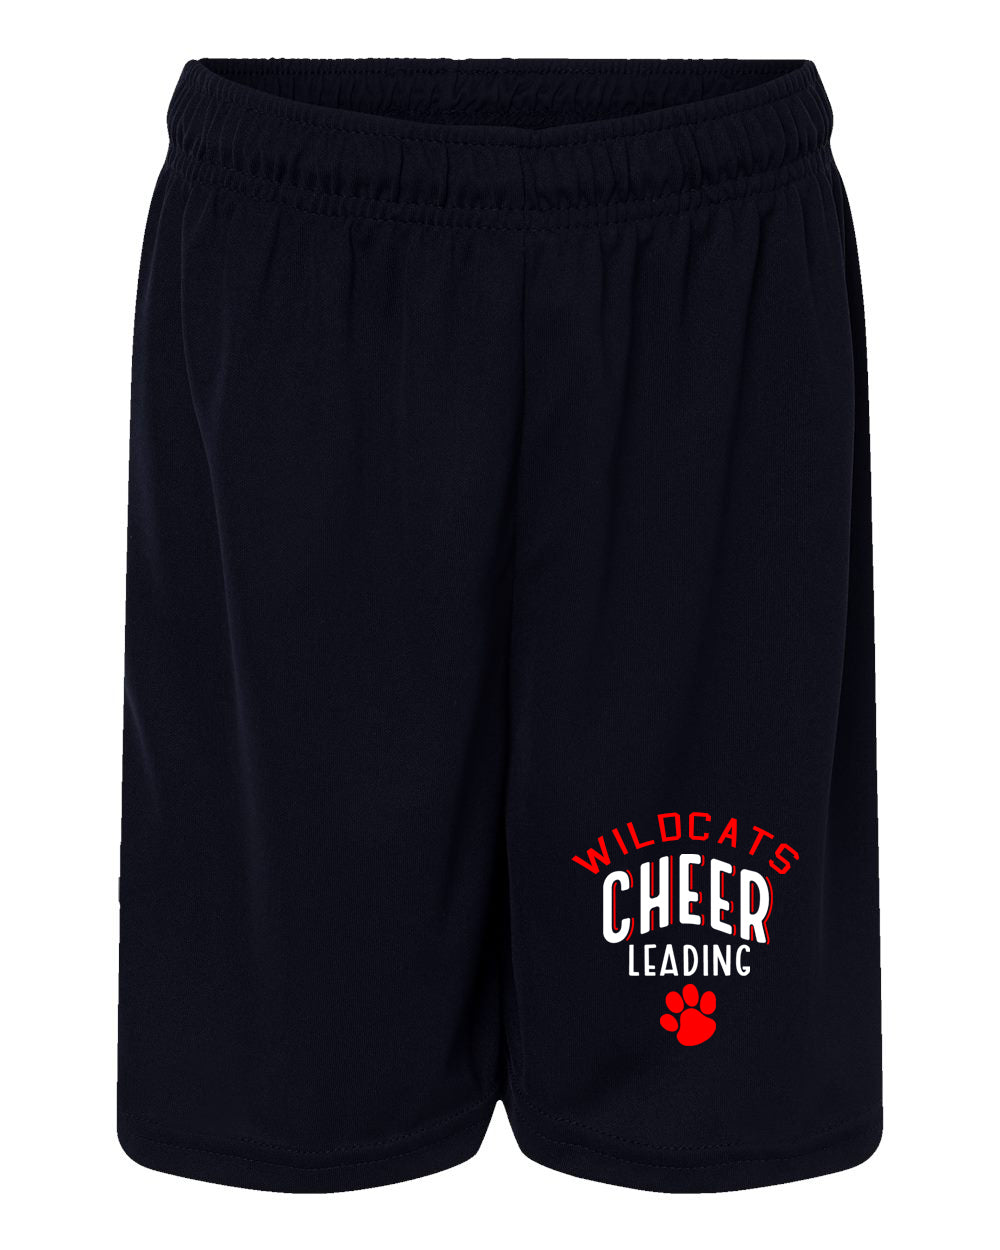 Wildcats Cheer Design 5 Performance Shorts